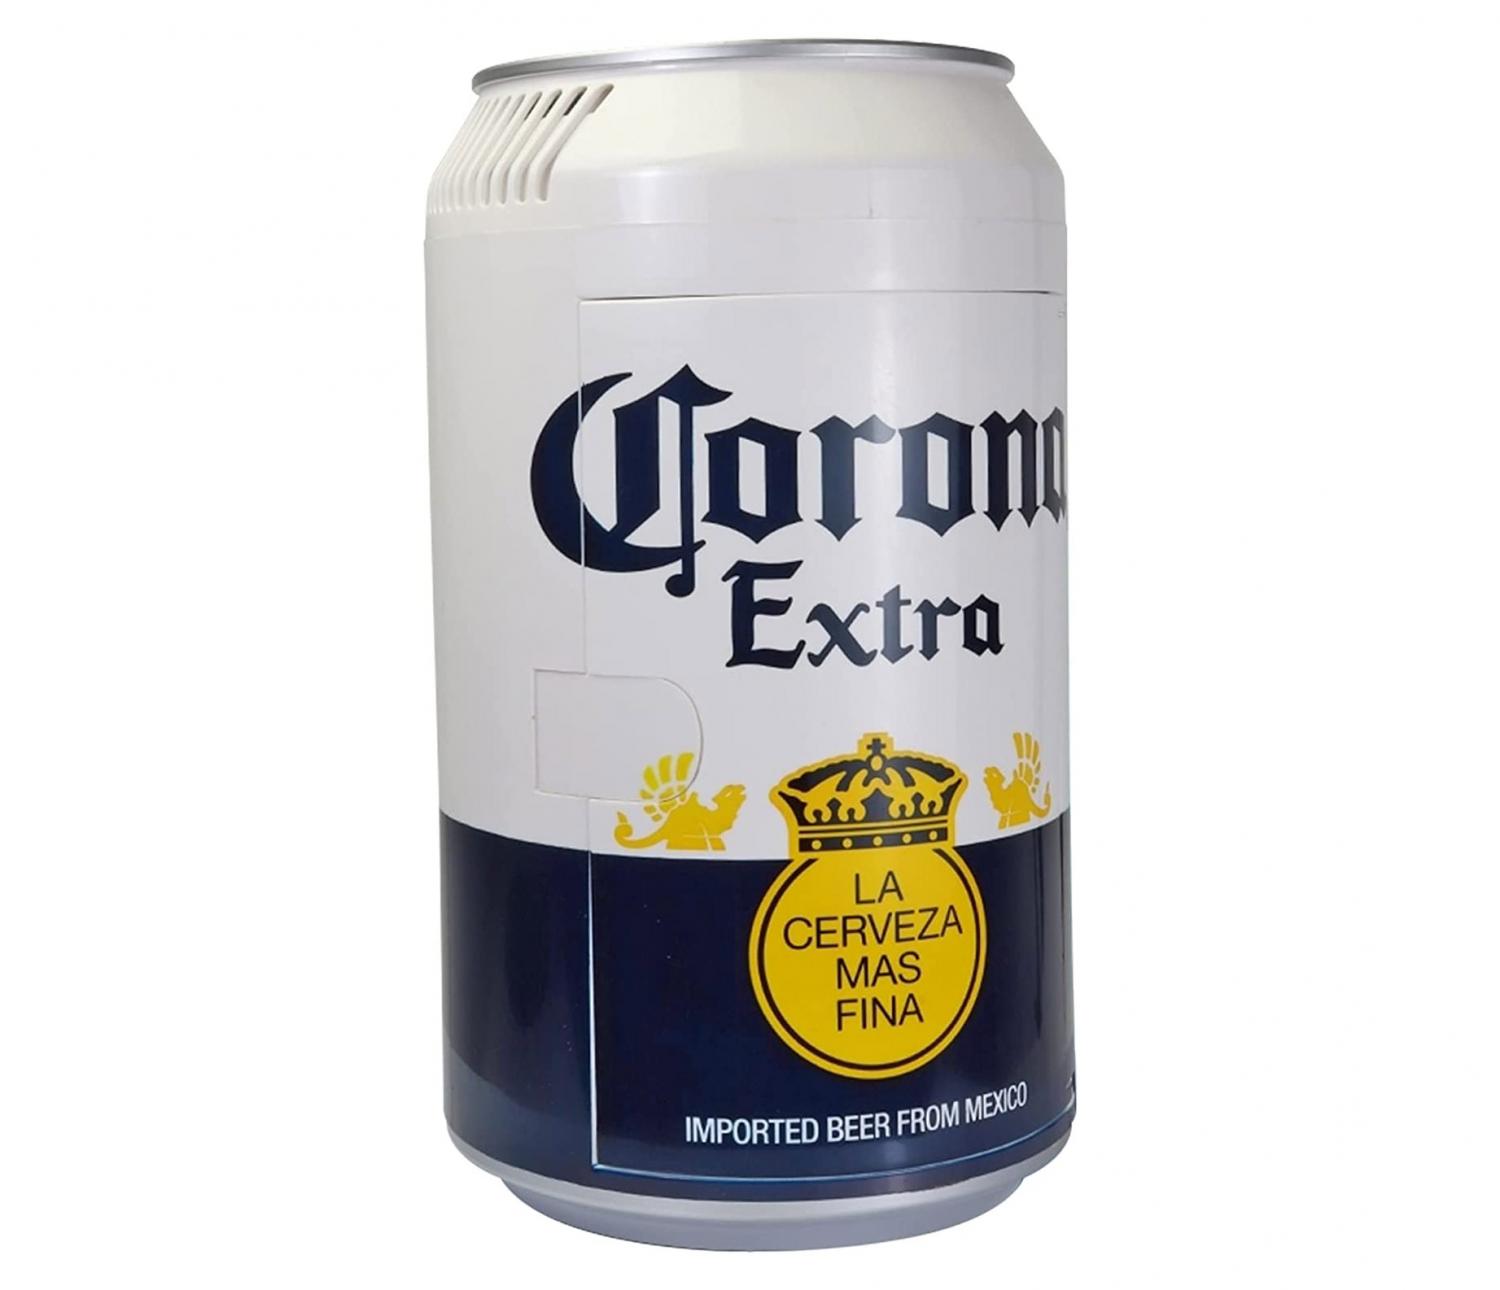 Giant Corona Can Beer Mini Fridge